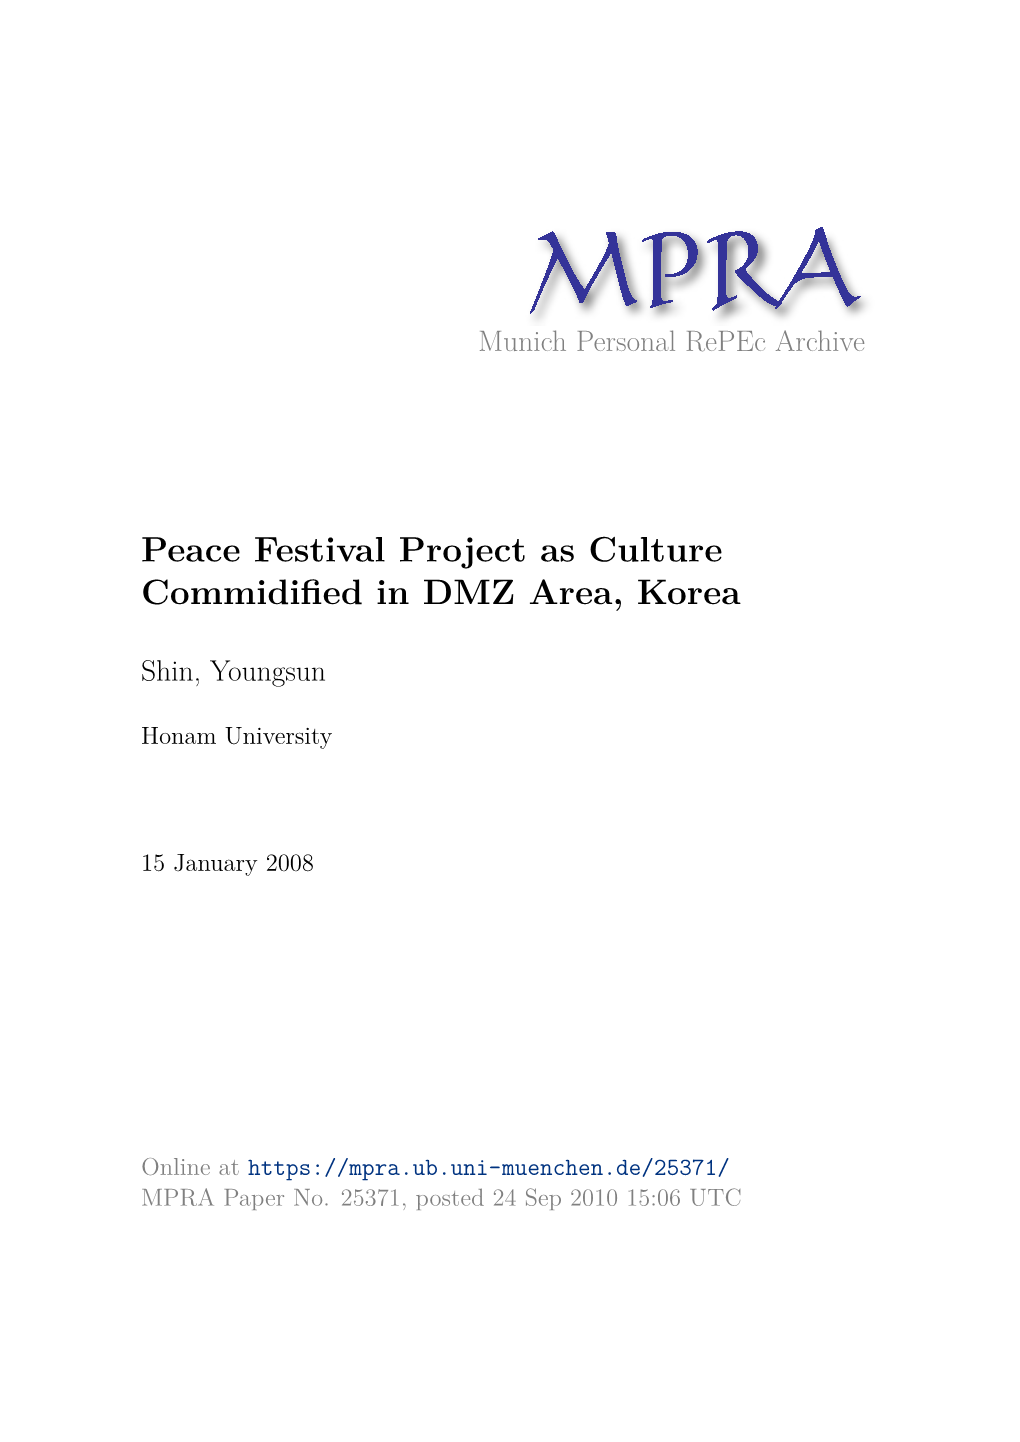 Peace Festival Project As Culture Commidified in DMZ Area, Korea